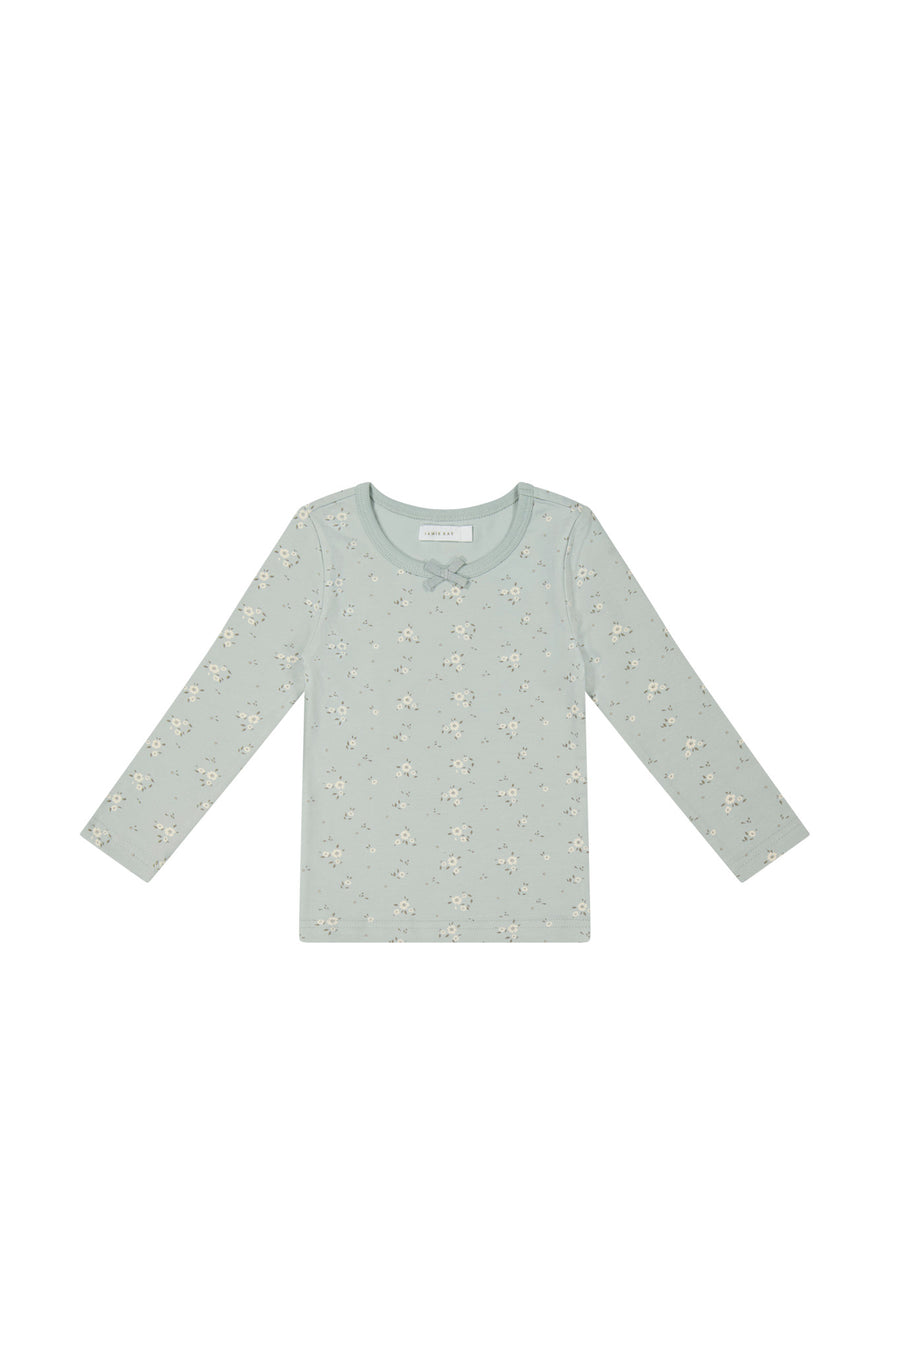 Organic Cotton Long Sleeve Top - Lulu Blue Childrens Top from Jamie Kay NZ